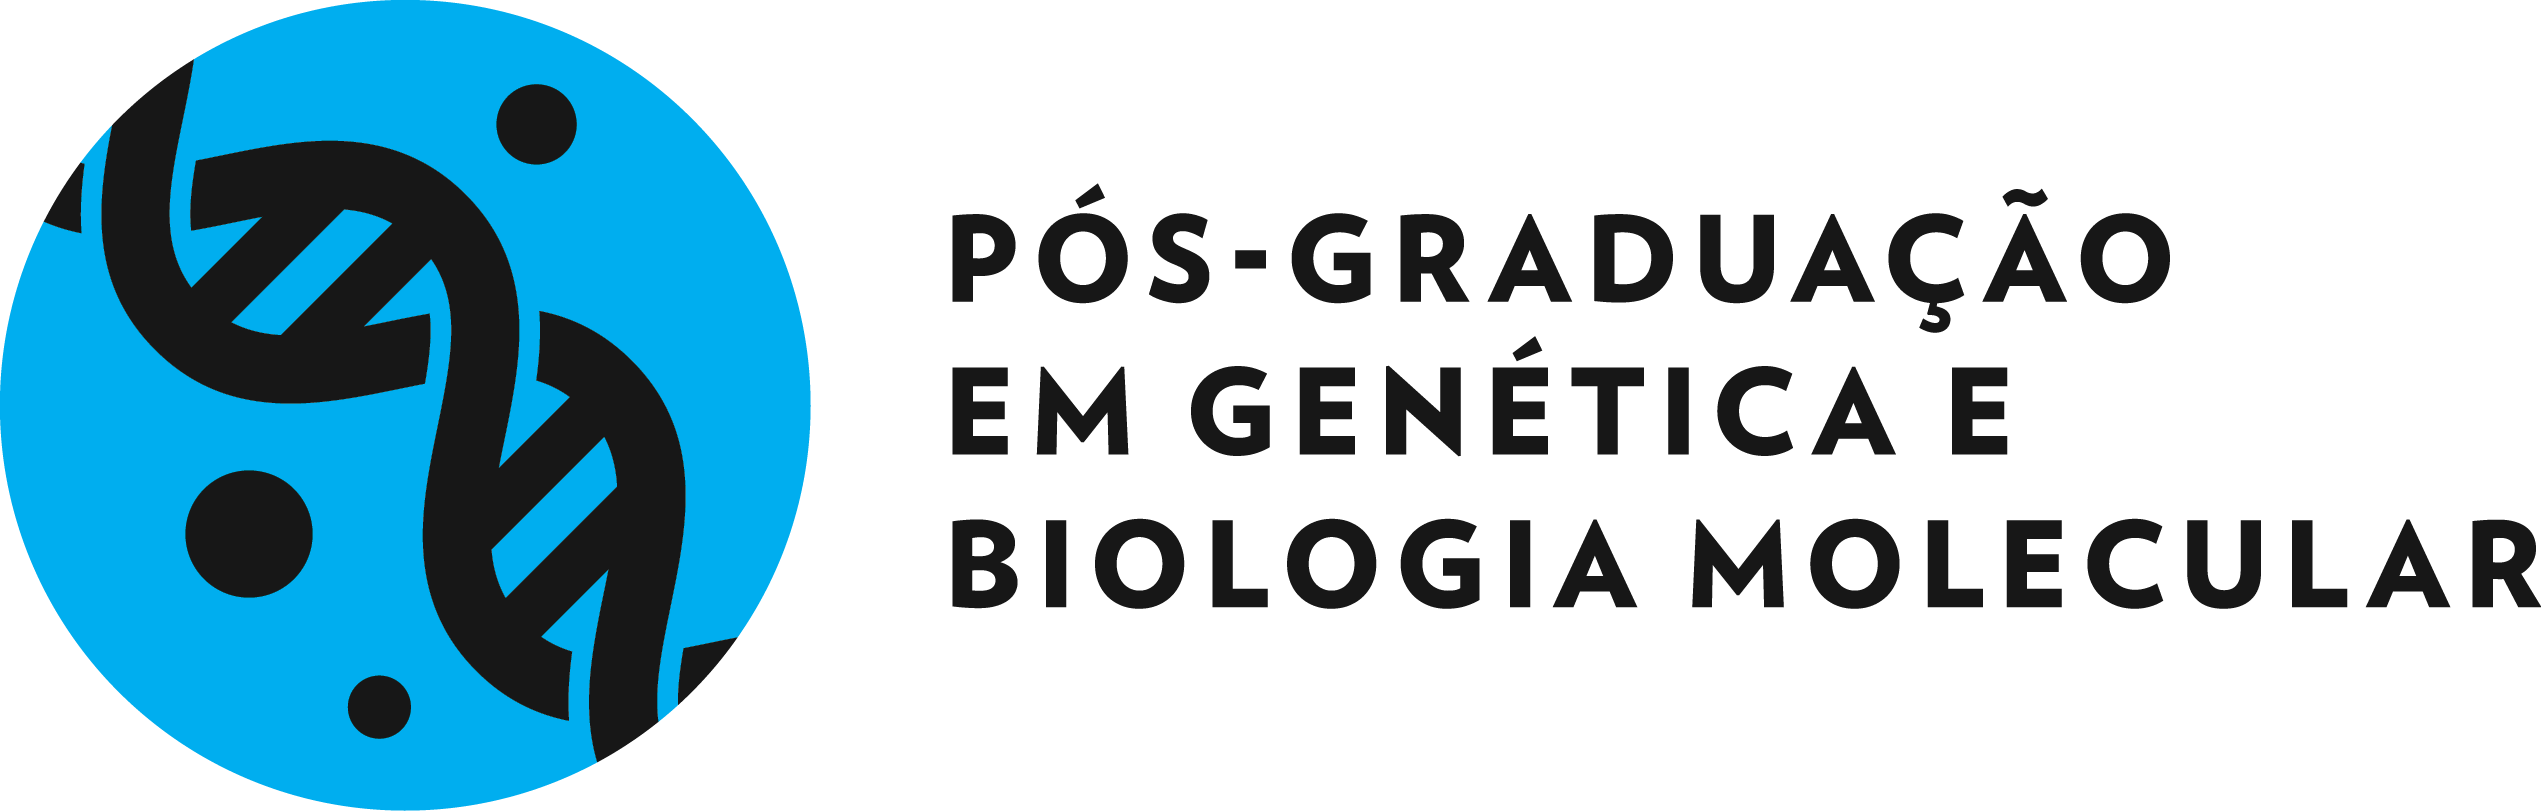 https://www.ib.unicamp.br/pos_genetica_molec/system/files/2021-11/pggbm-logo.png